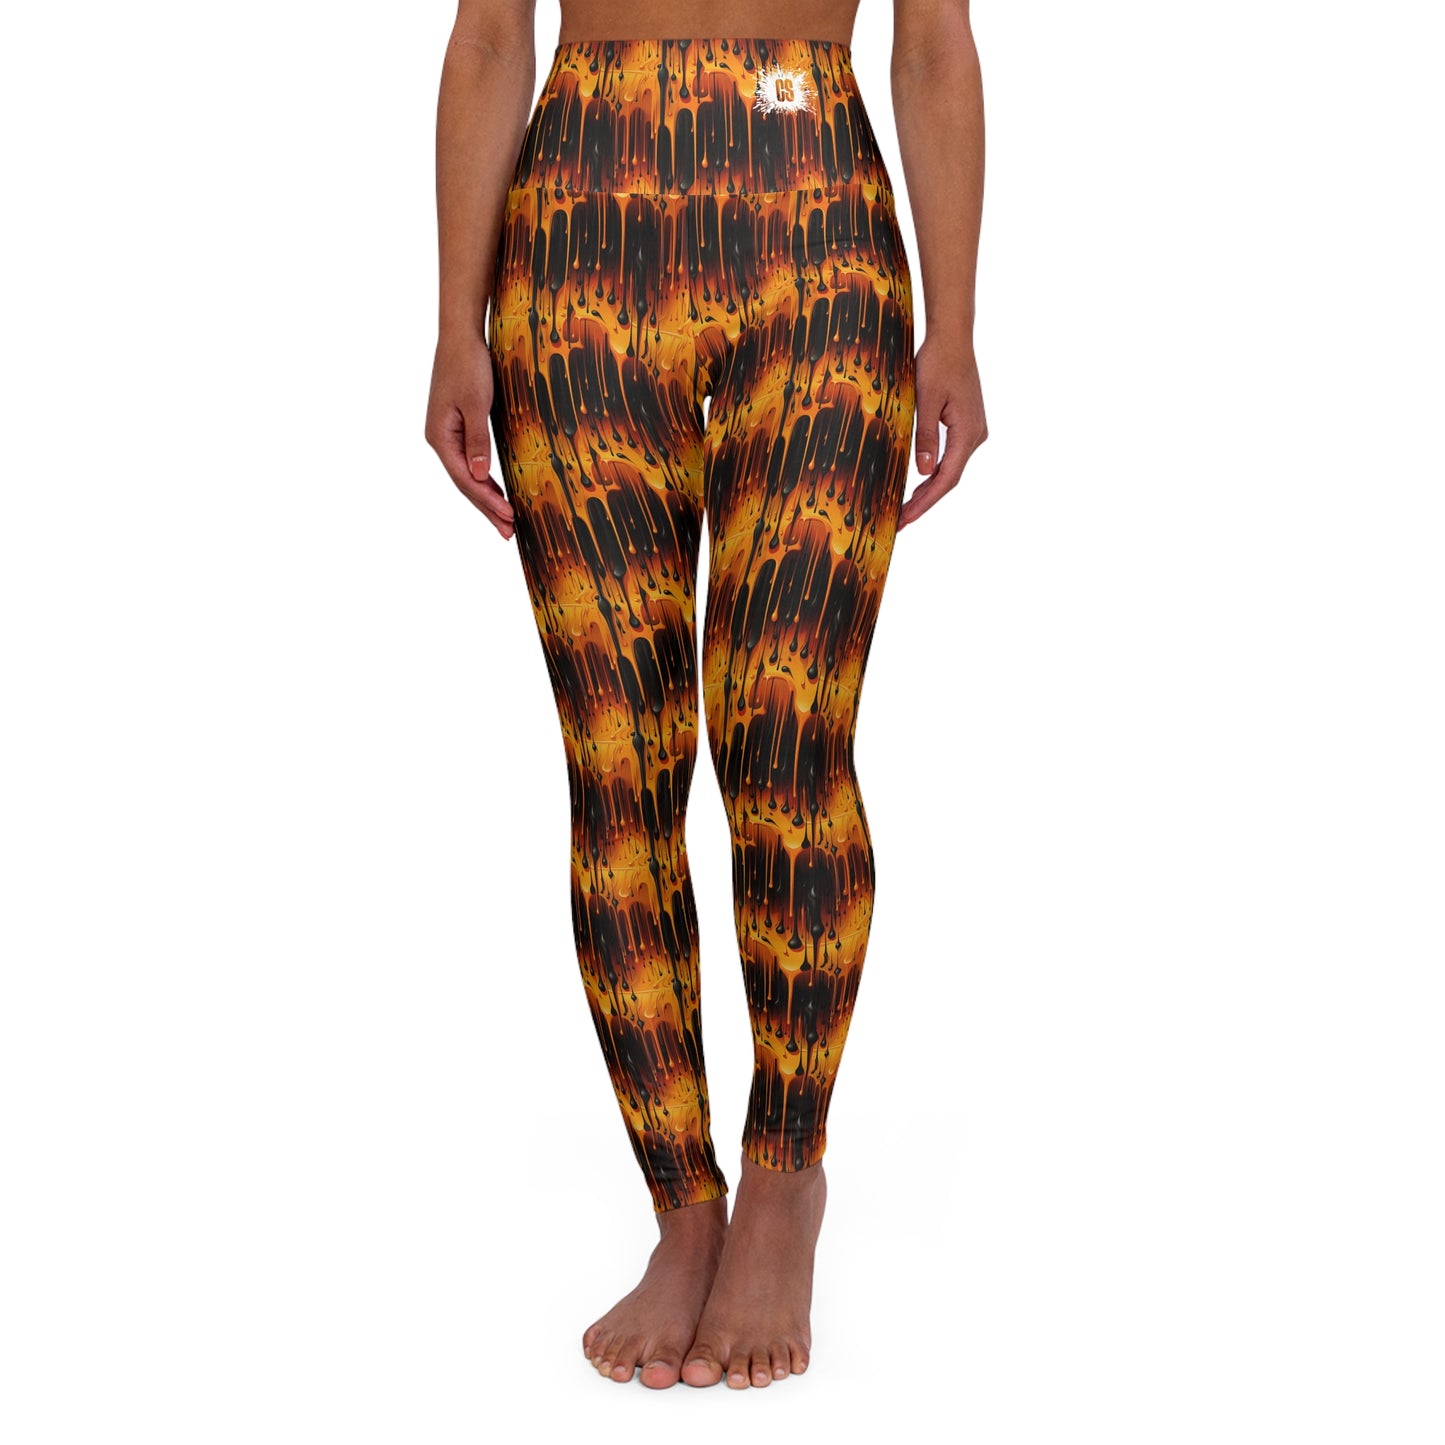 Orange & Black Dripping Paint High Waisted Yoga Leggings